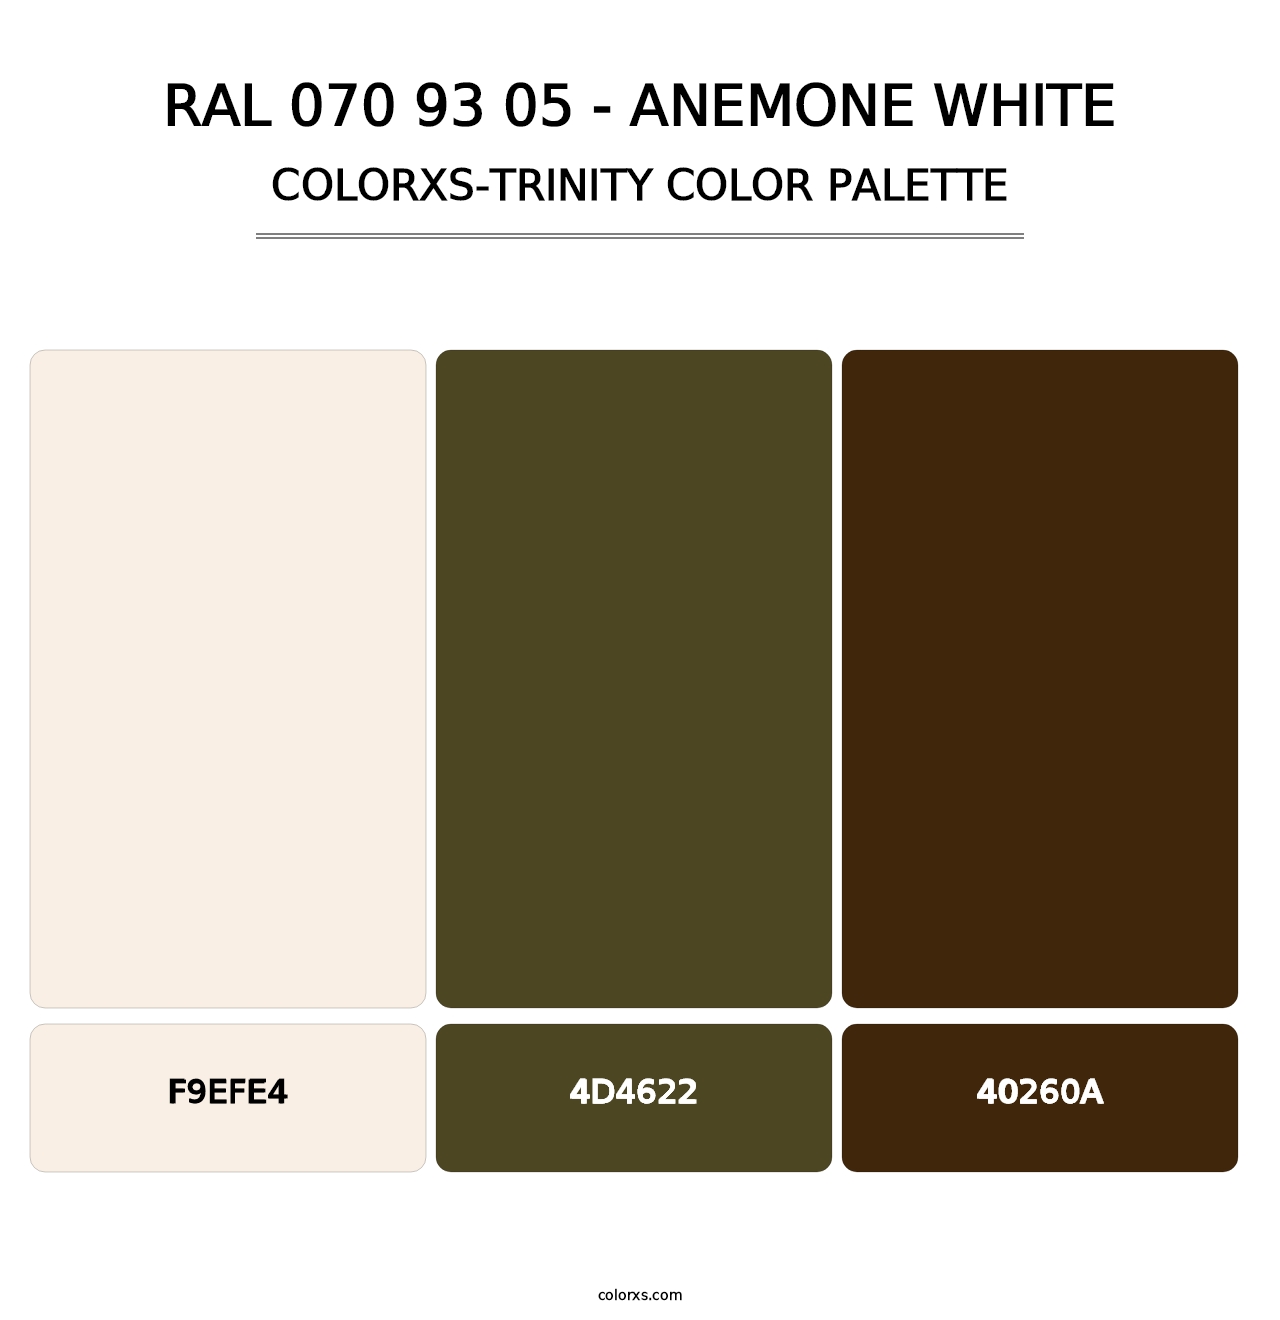 RAL 070 93 05 - Anemone White - Colorxs Trinity Palette